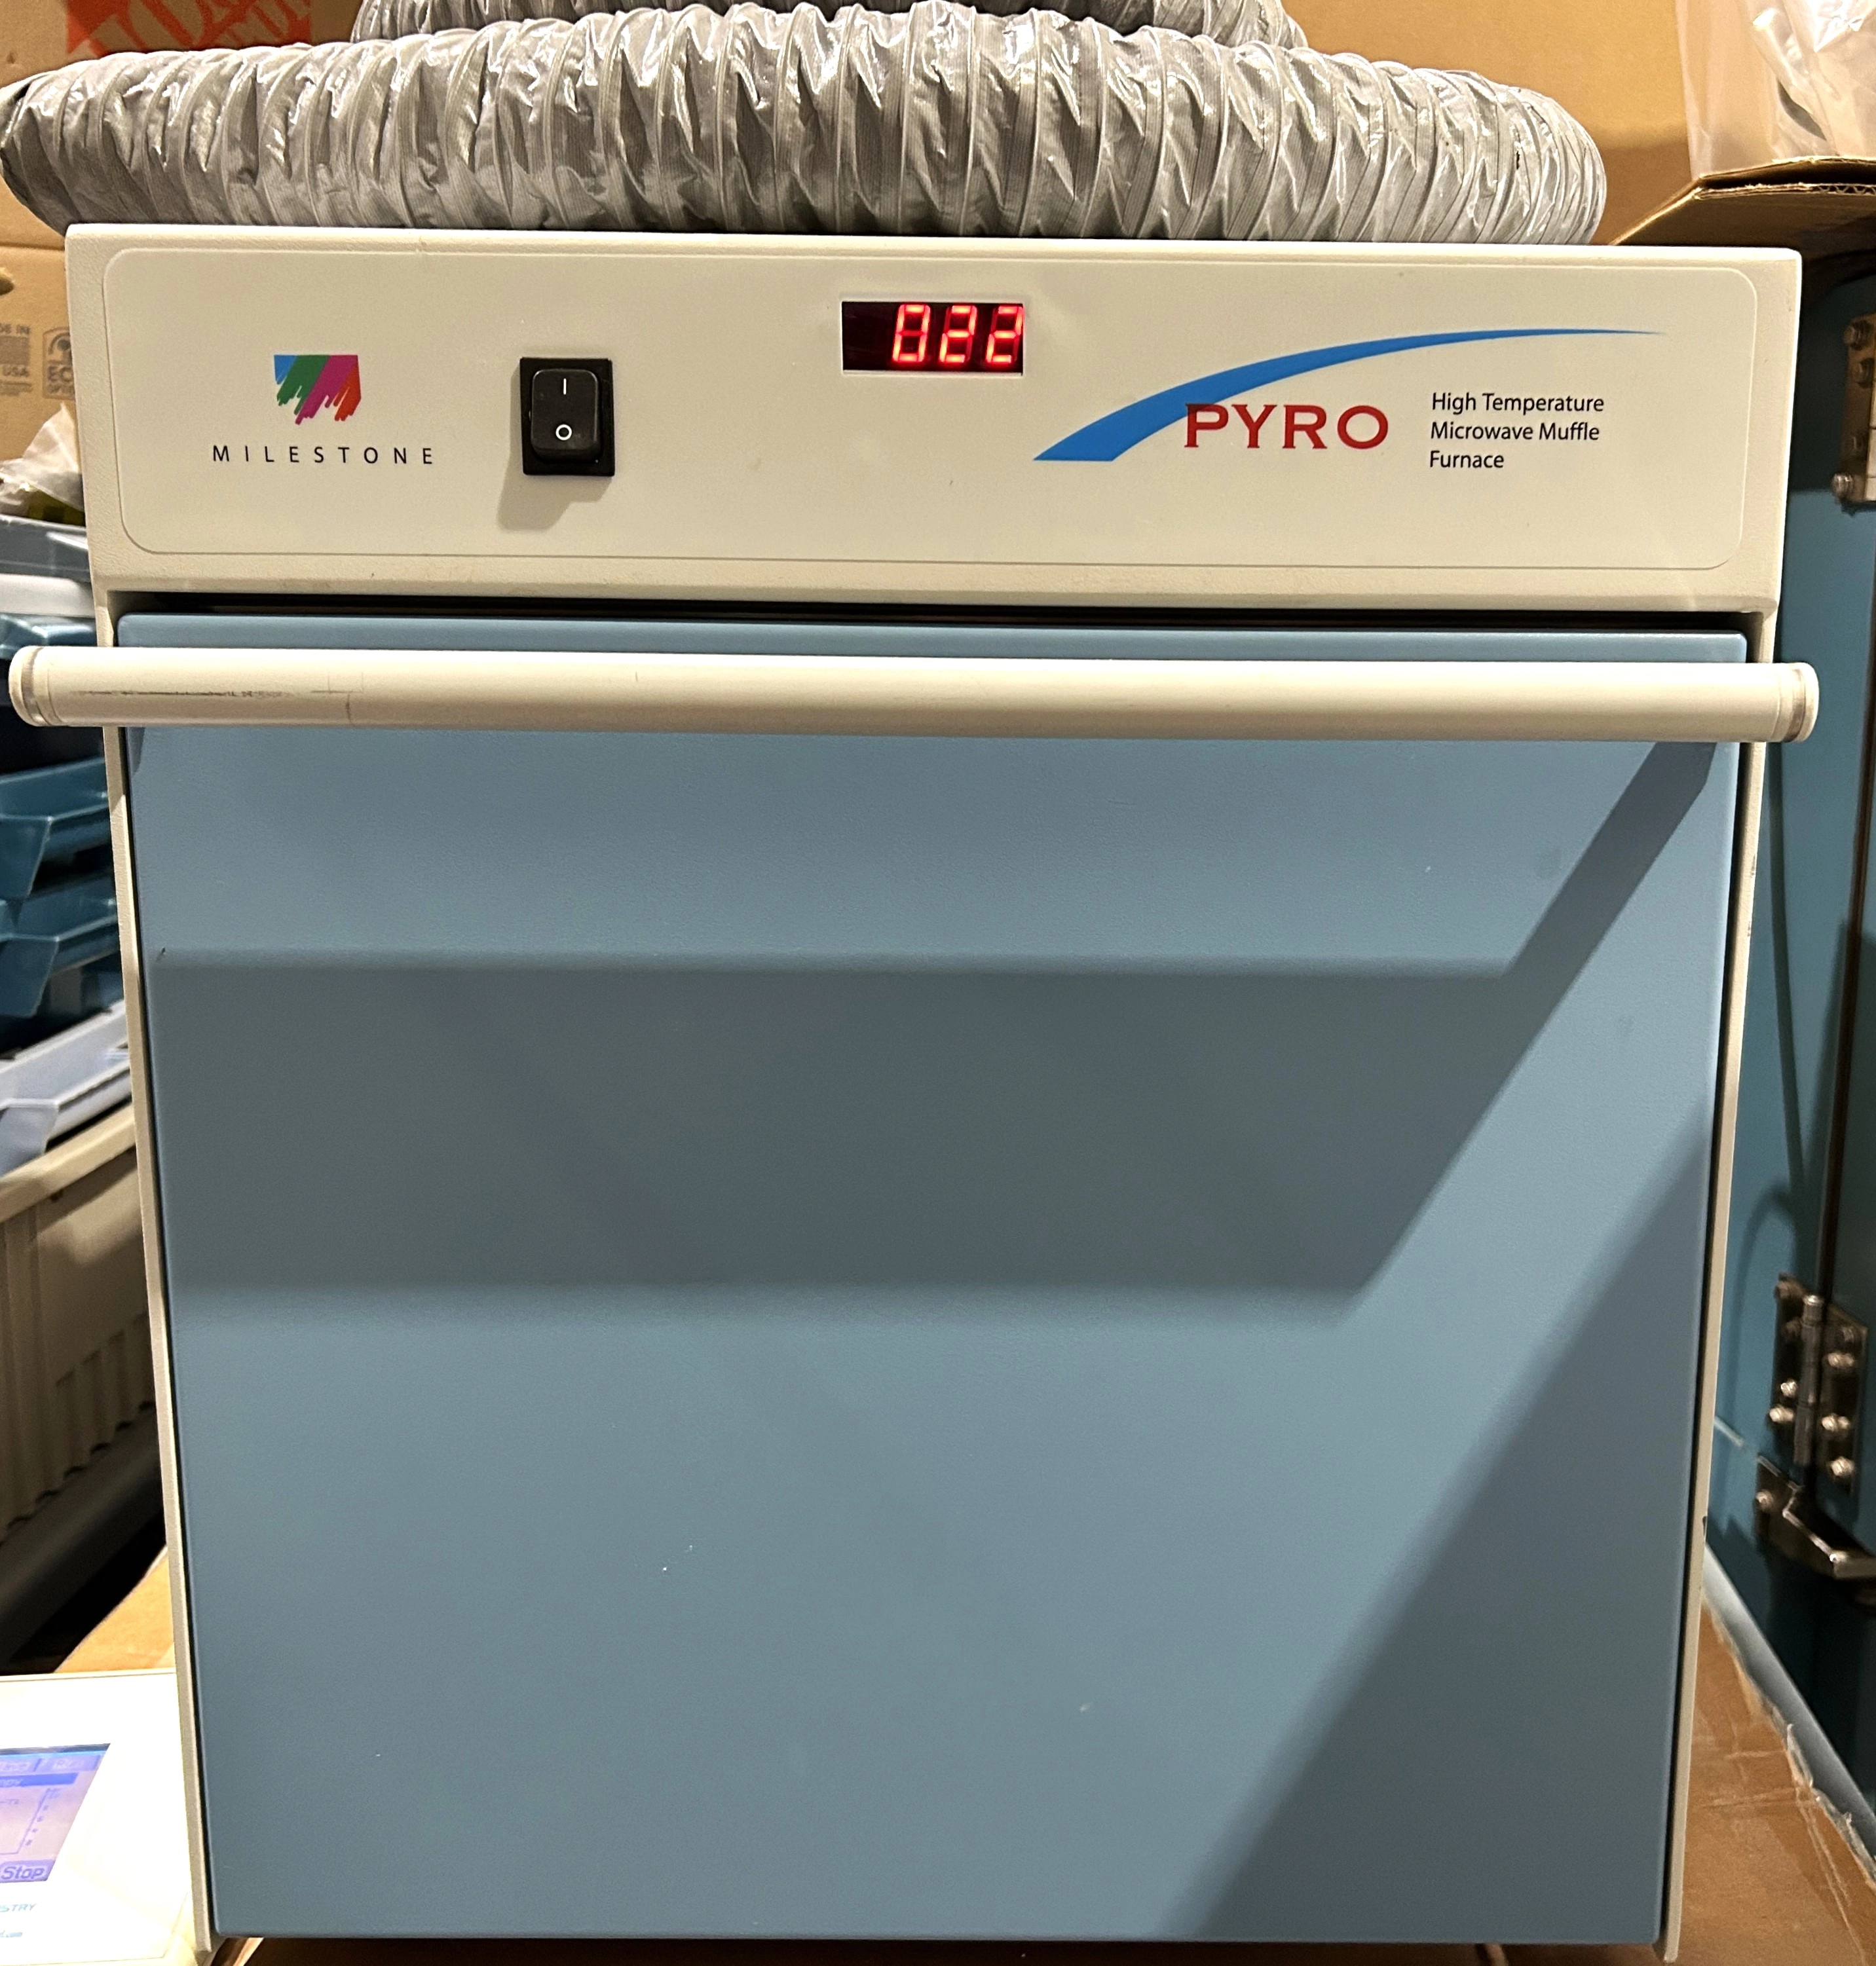 Milestone PYRO 260 Microwave Muffle Furnace